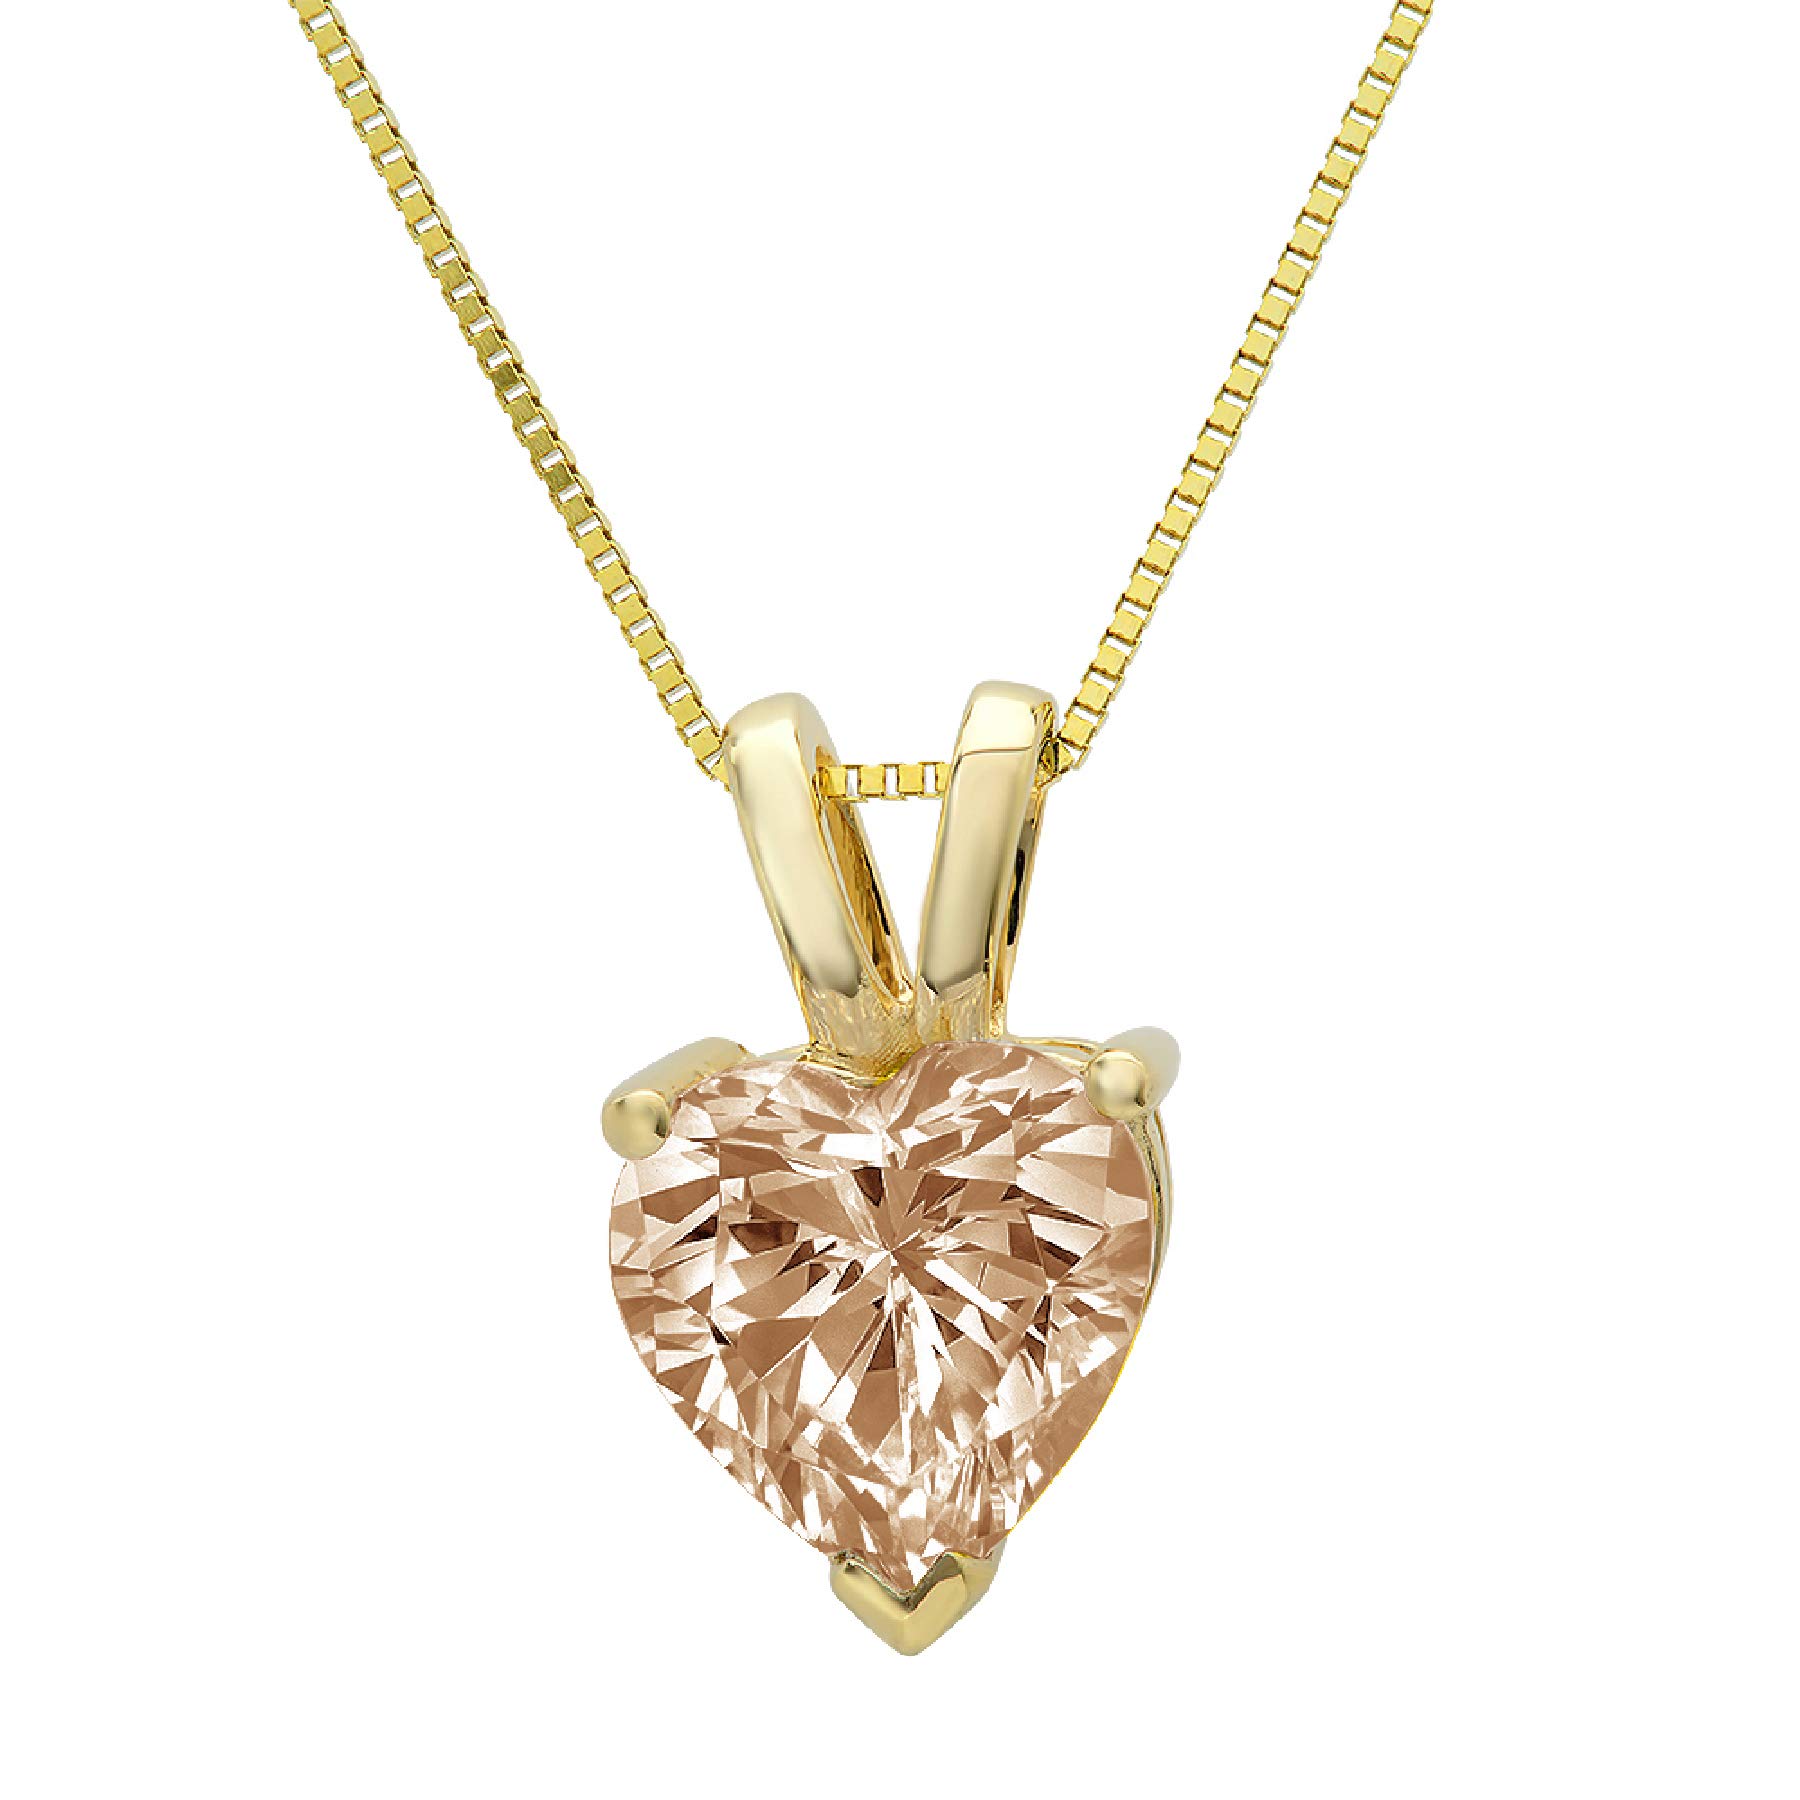 2.0 ct Brilliant Heart Cut Fine Pendant Brown Champagne Simulated Diamond CZ Gem Ideal VVS1 Solitaire Pendant Necklace With 18